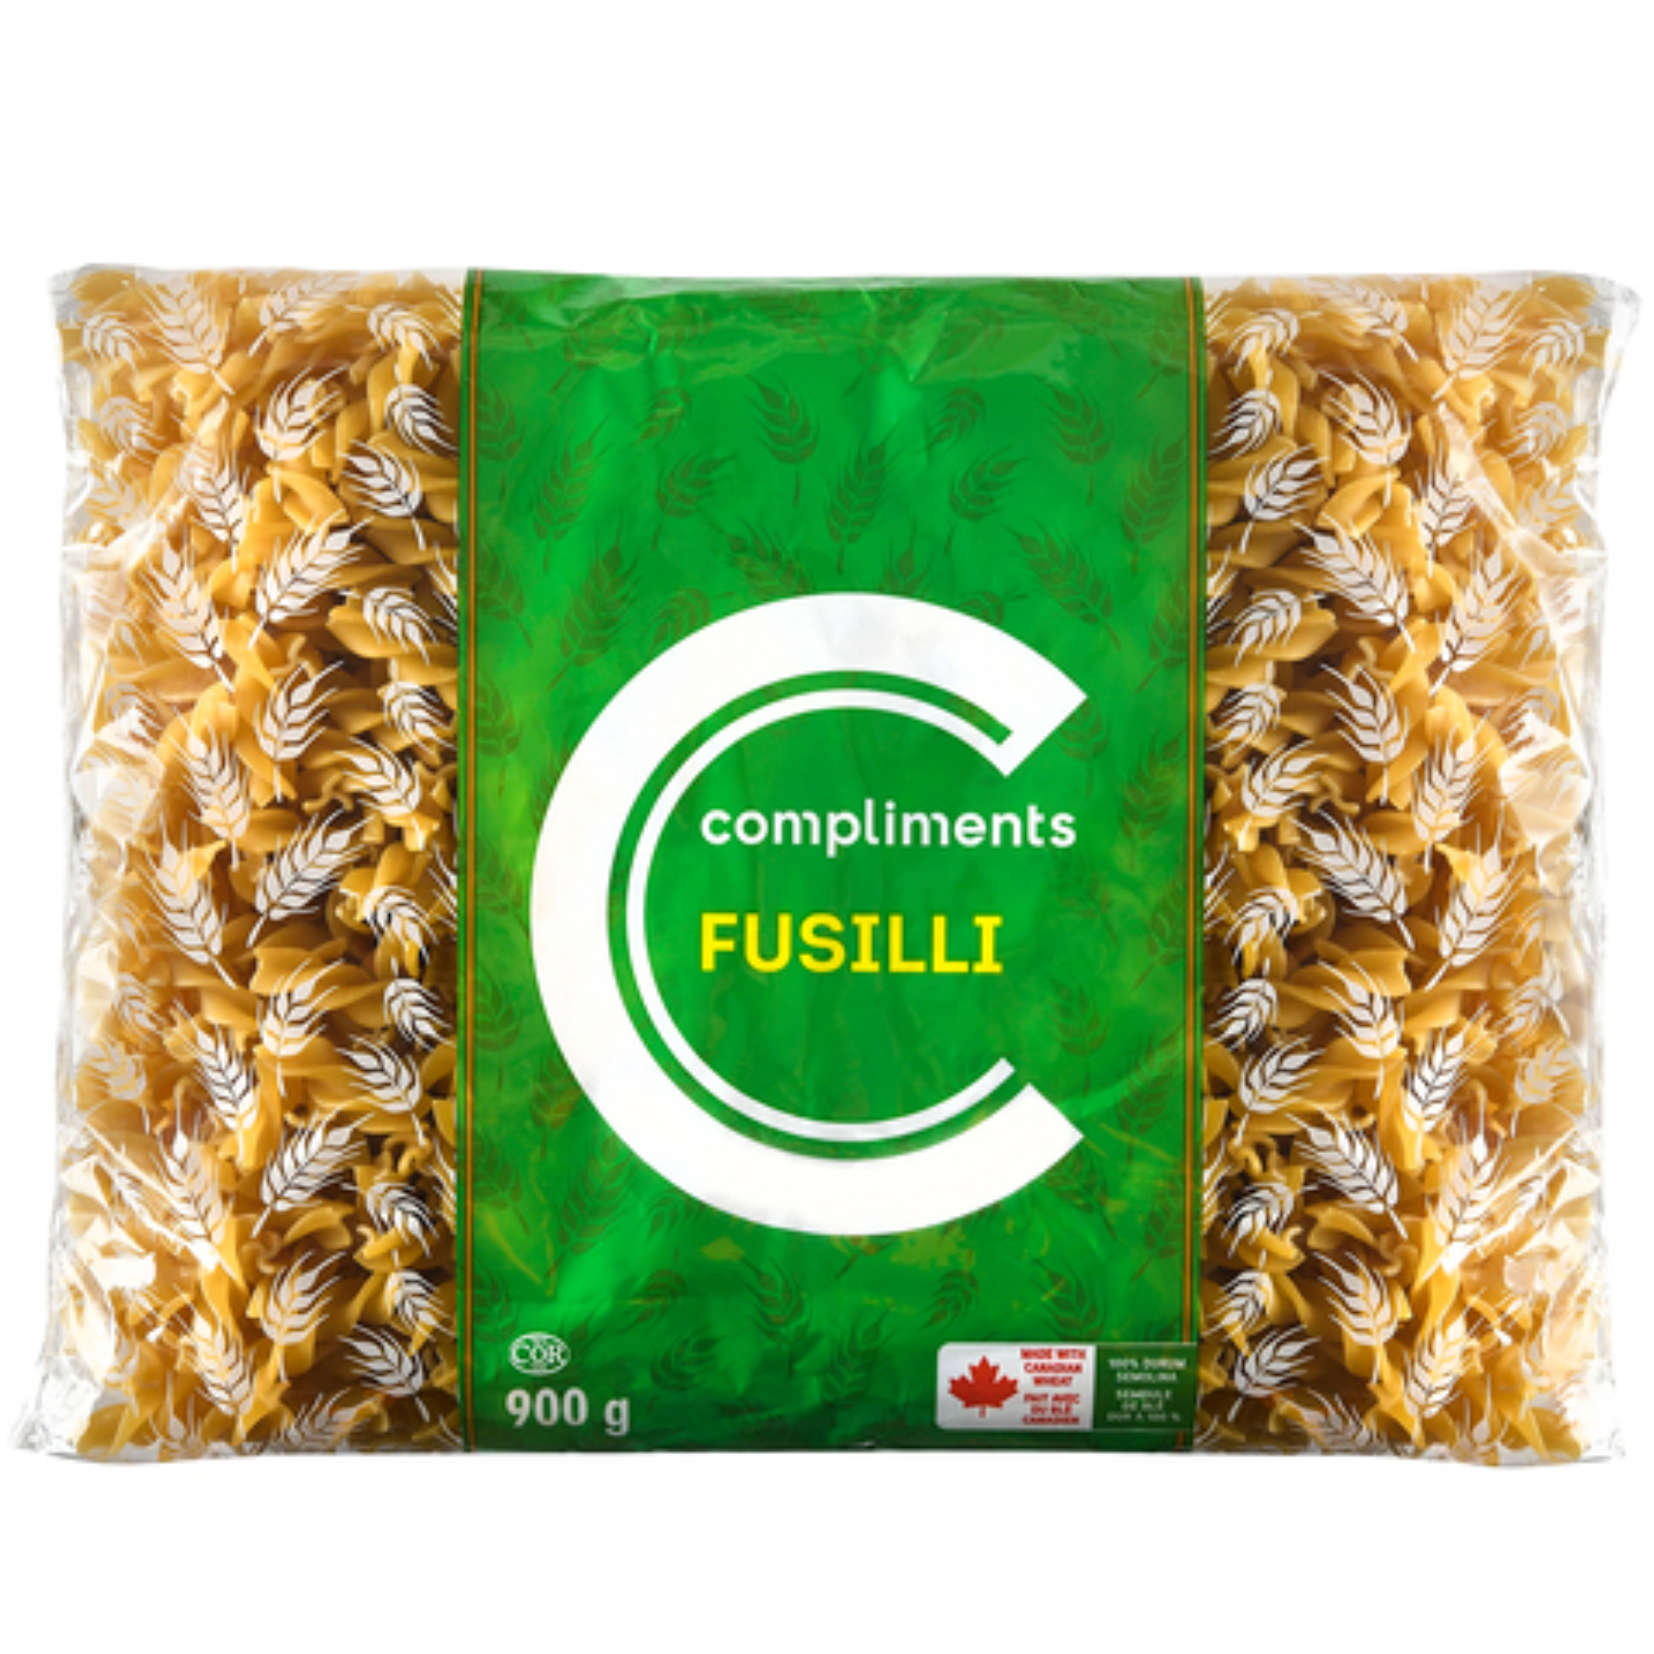 Compliments Fusilli Pasta 900g